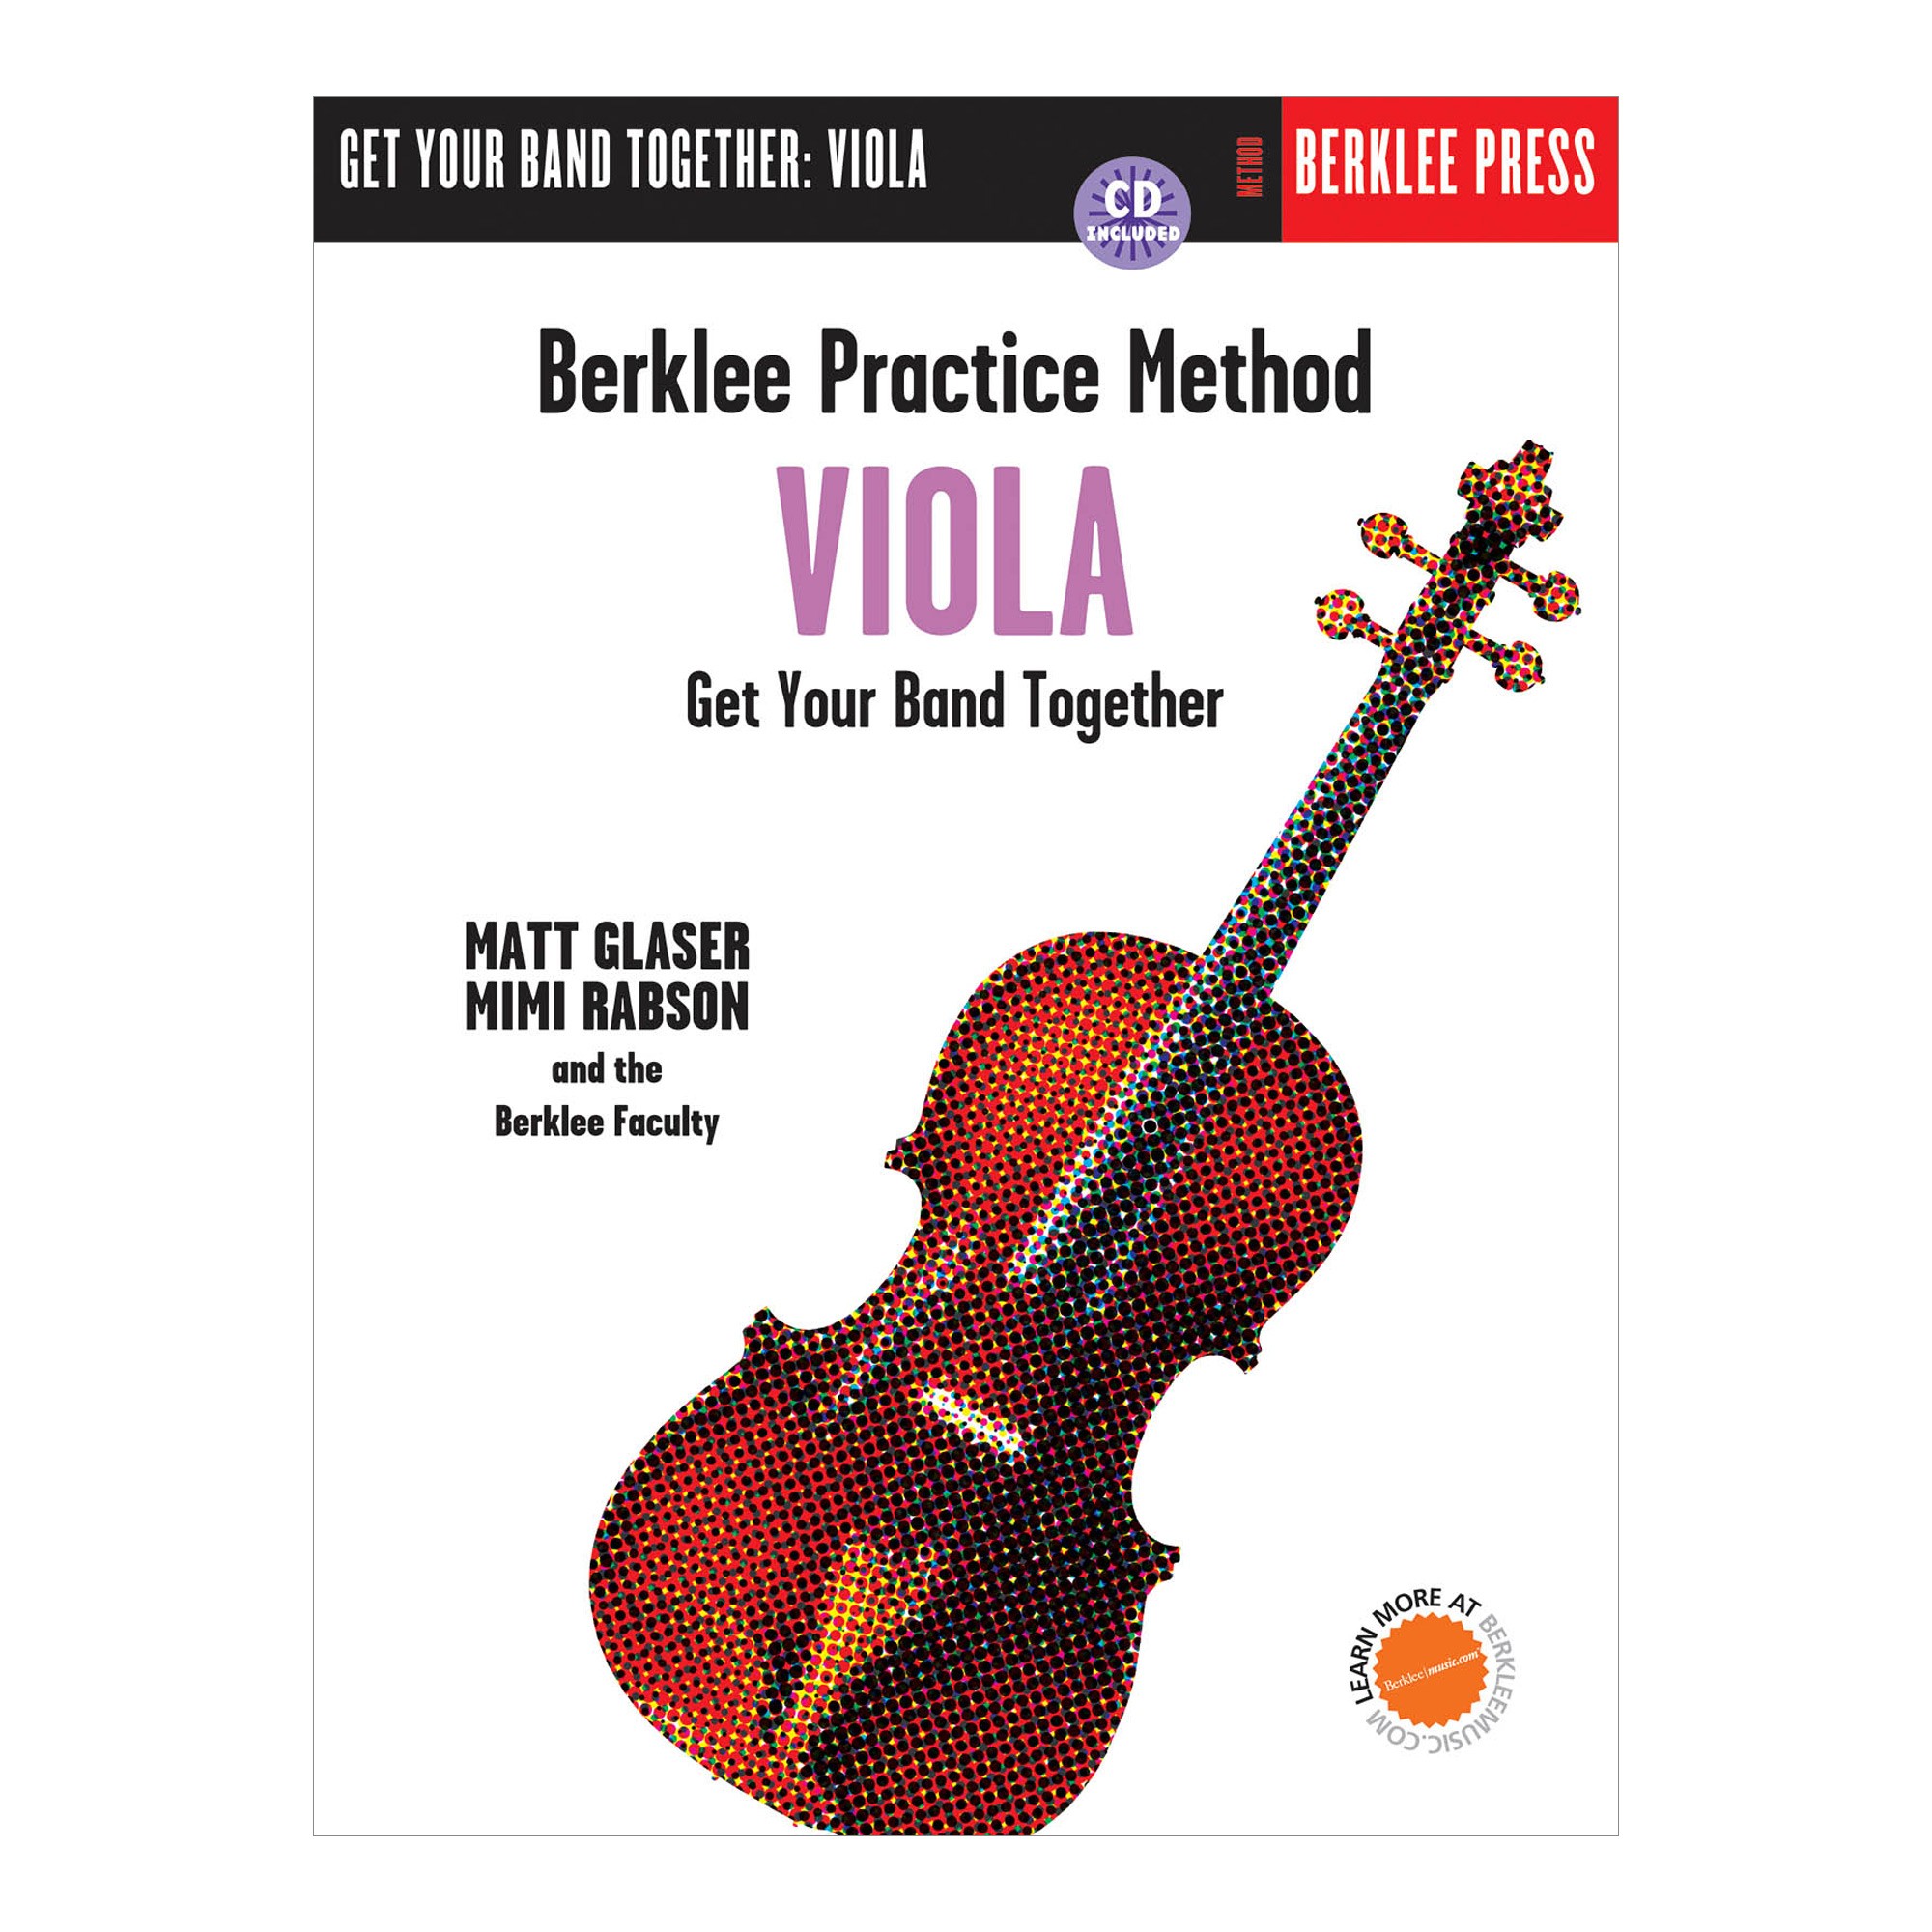 Berklee Practice Method for Viola - Get Your Band Together